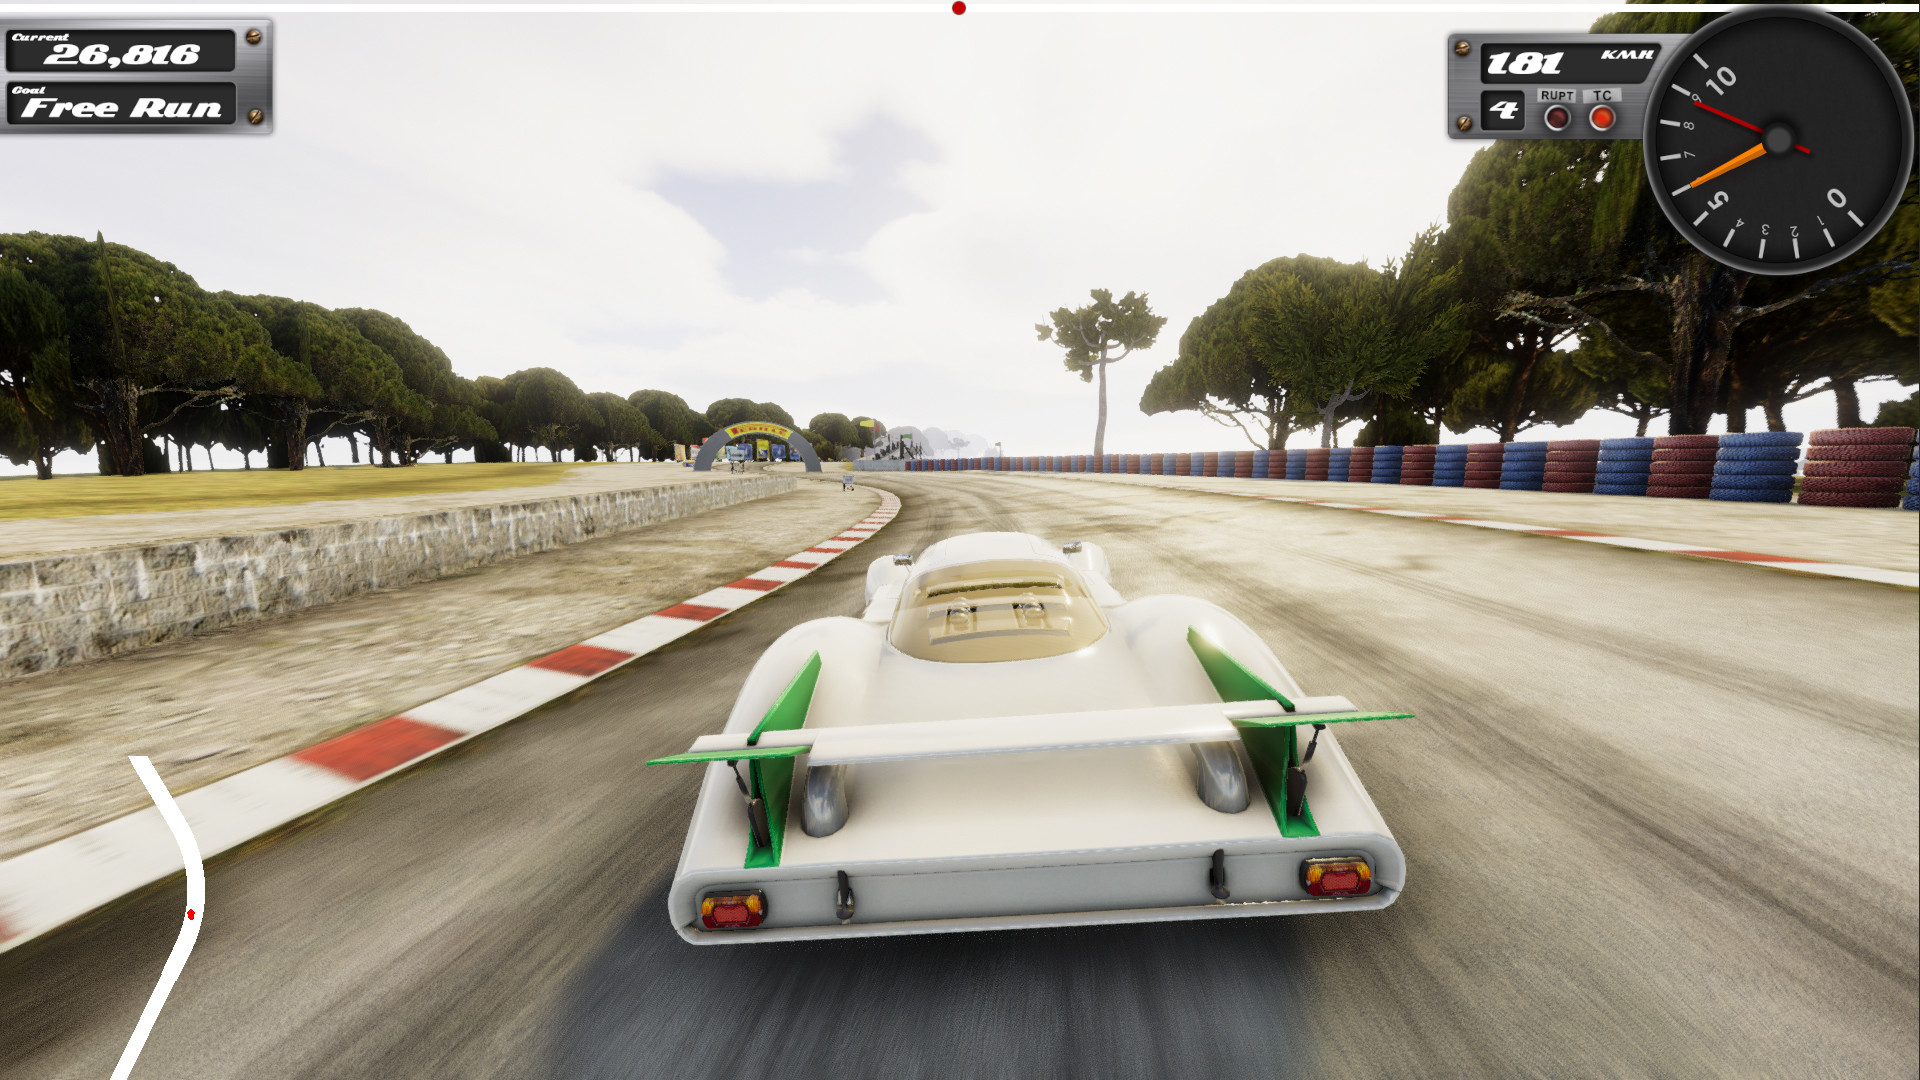 100 классических игр. Классика игра. Classic Racers. Wii GP Classic Racing. Elite Racing.